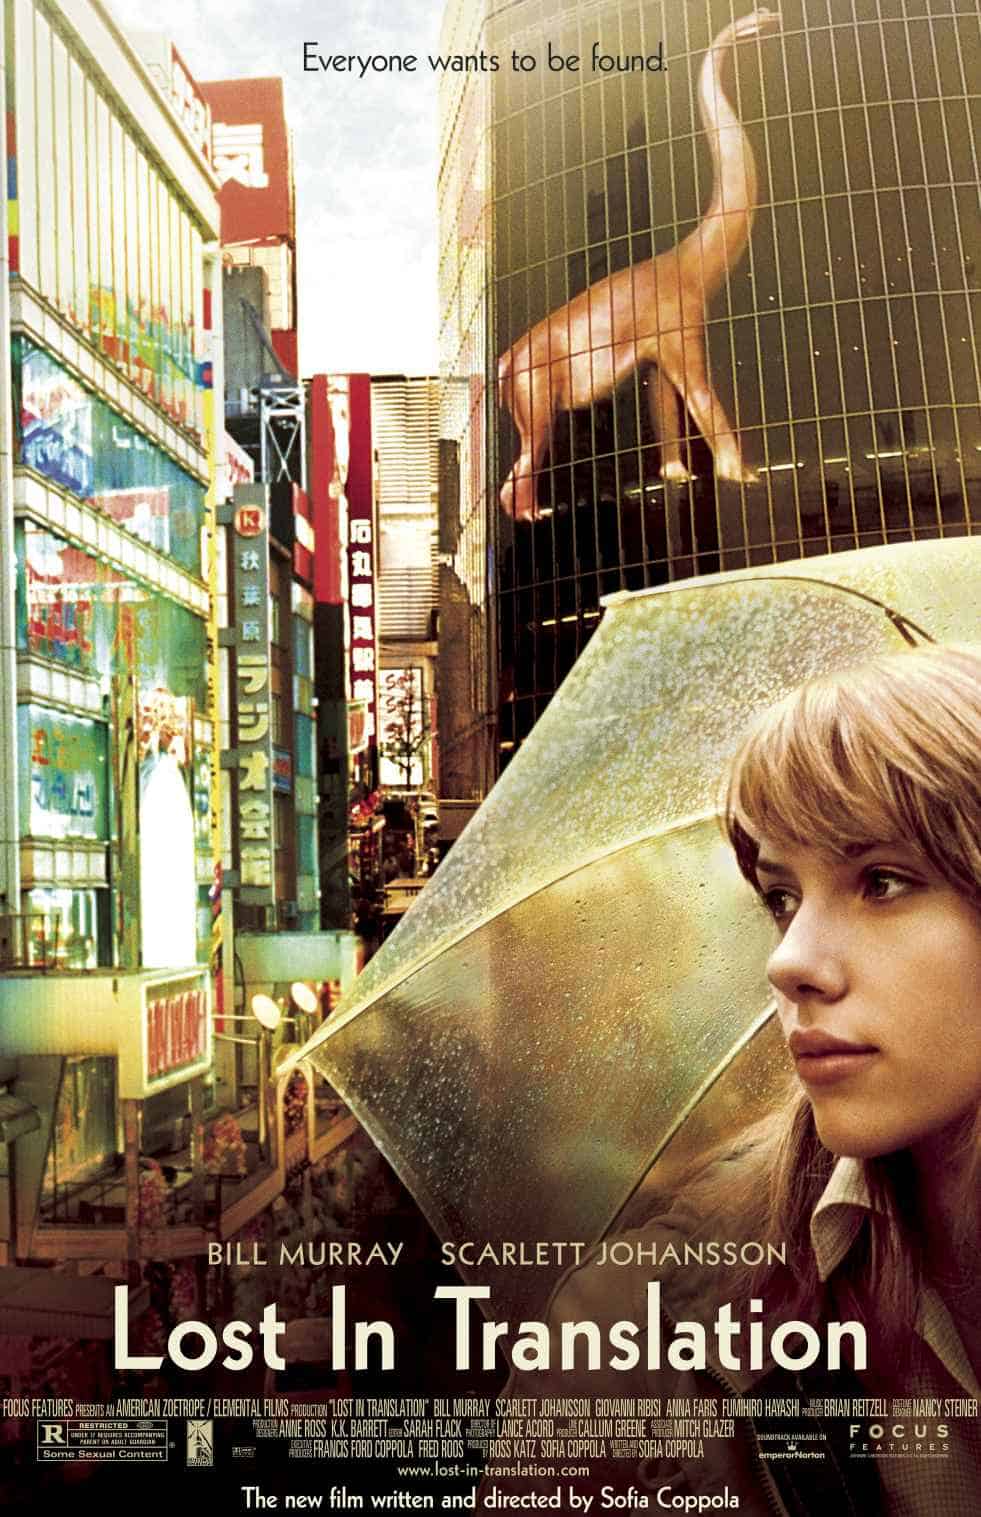 500 Days Of Summer similar movie Lost in Translation (2003)